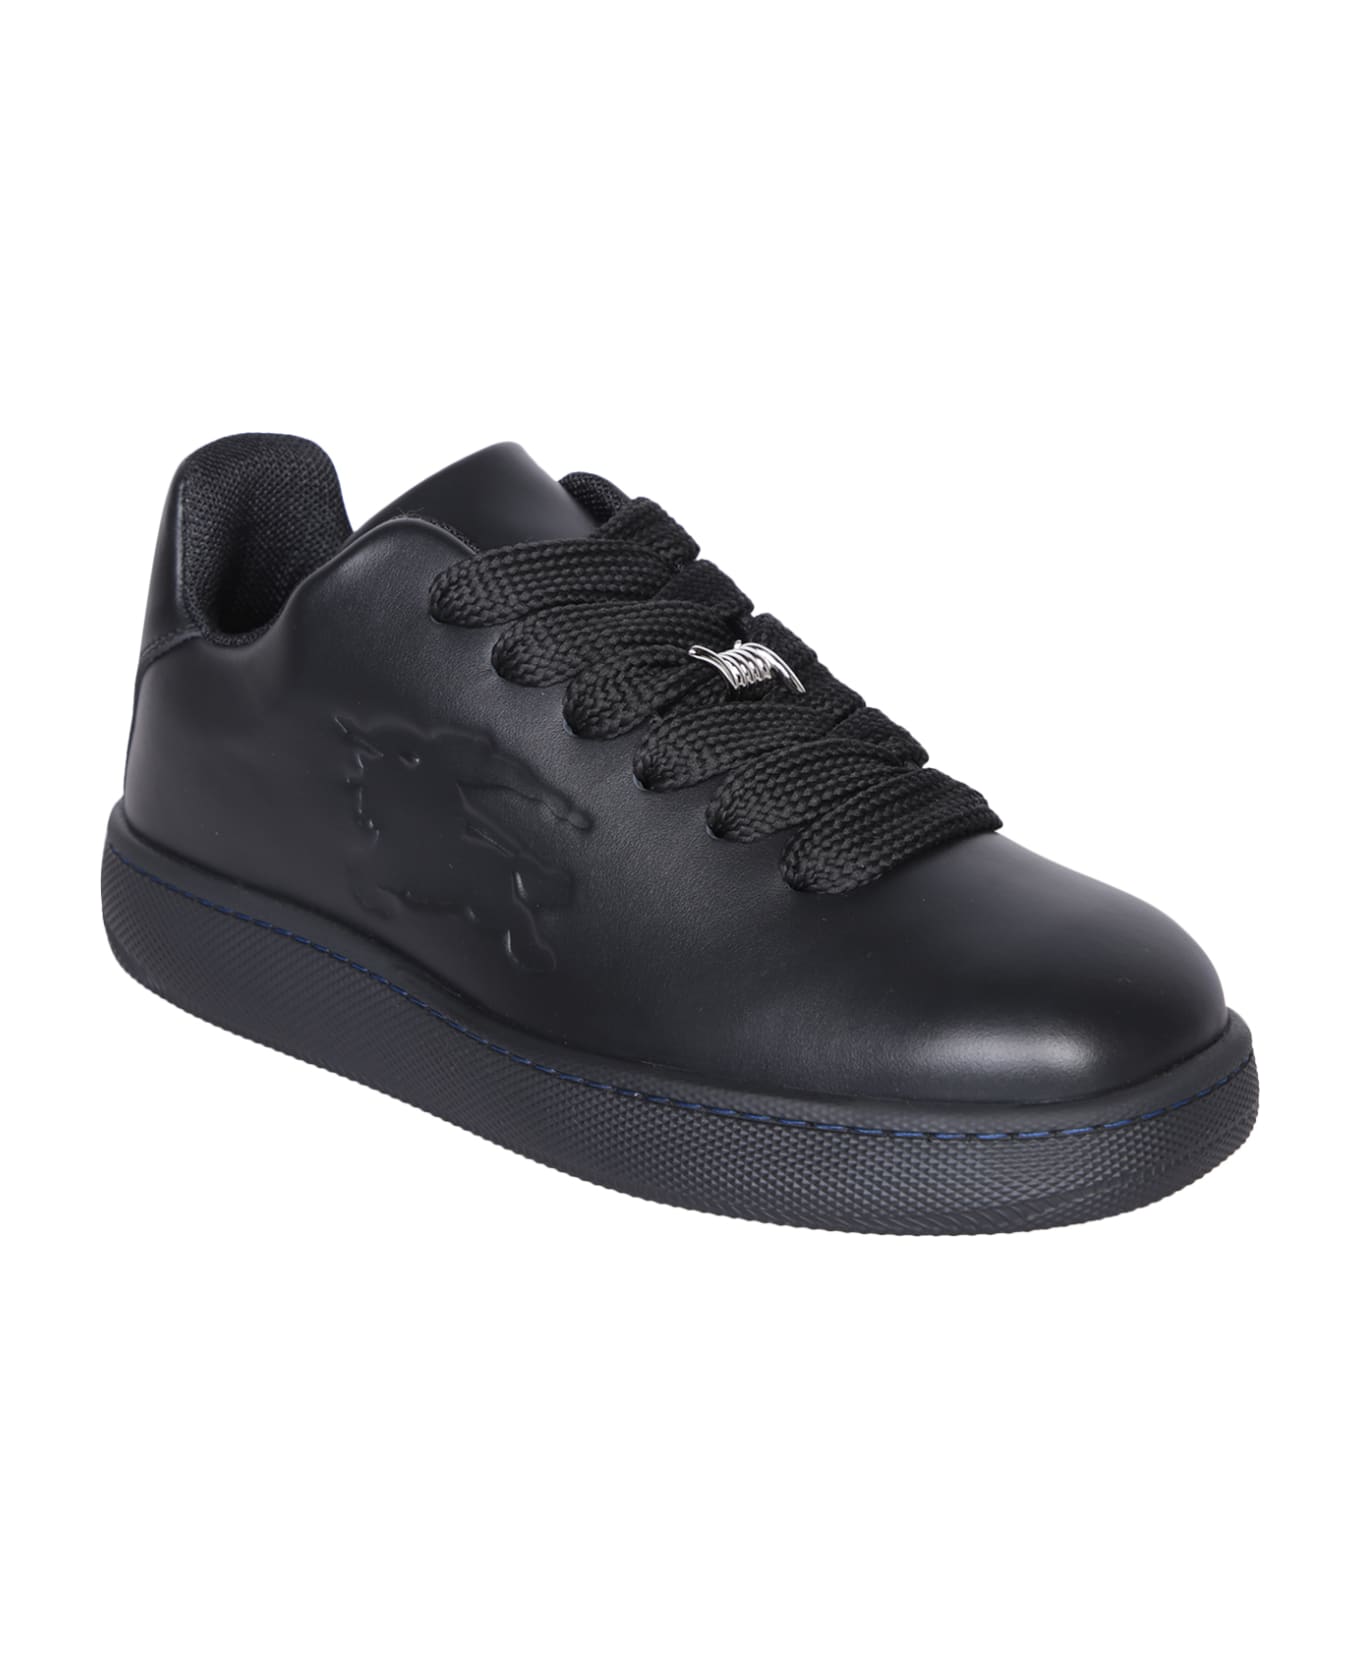 Burberry Leather Black Sneakers - Black スニーカー